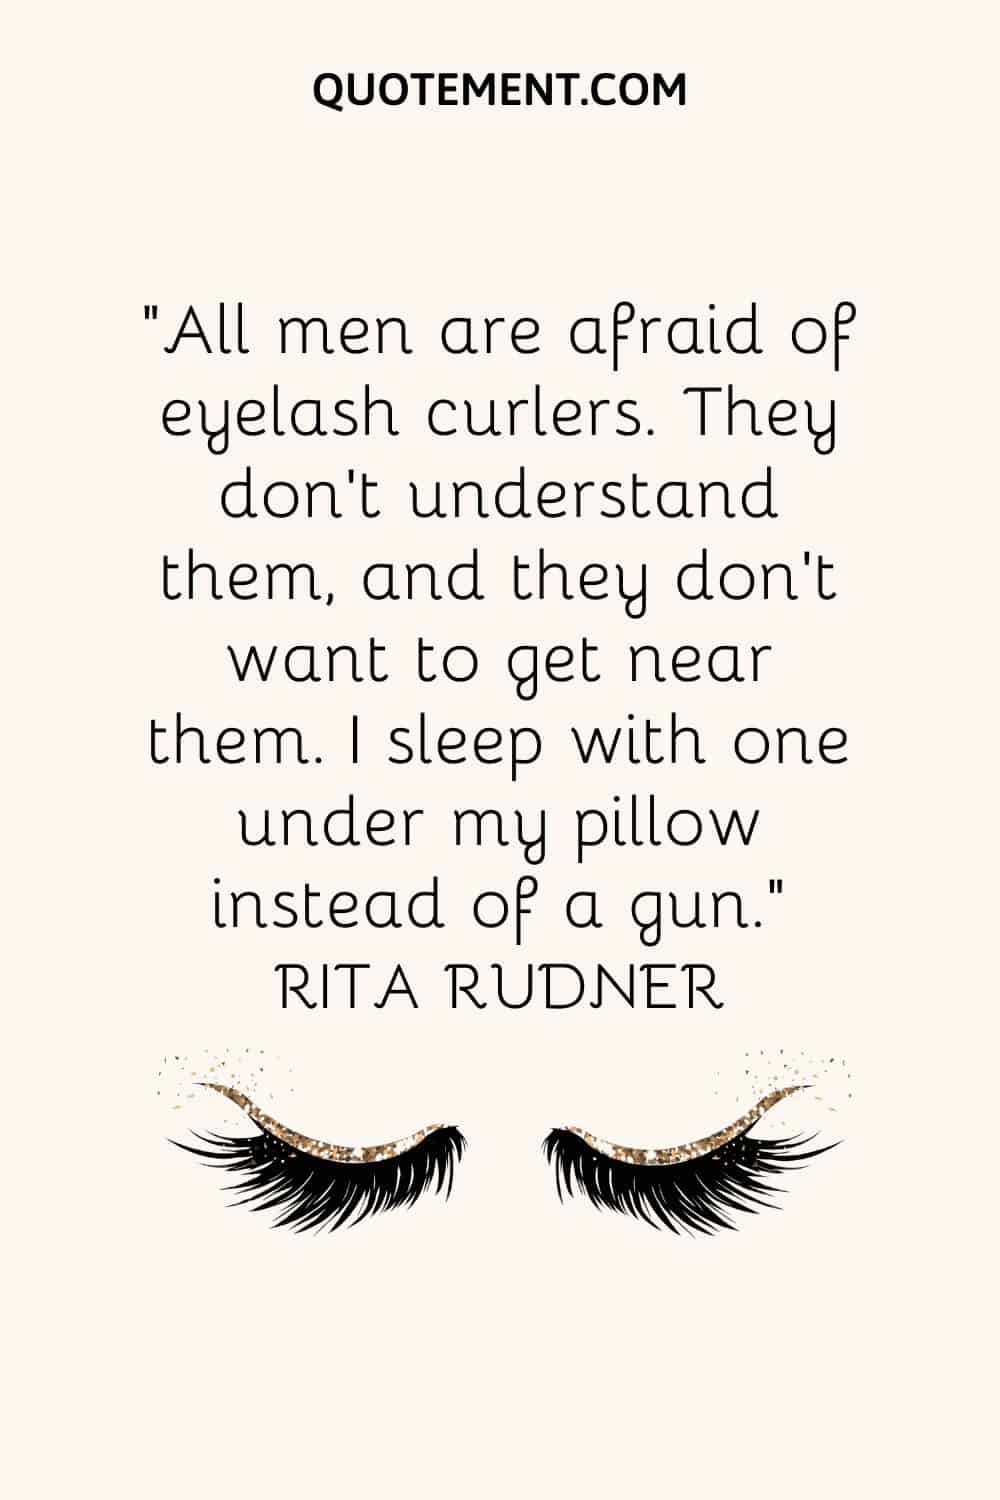 All men are afraid of eyelash curlers